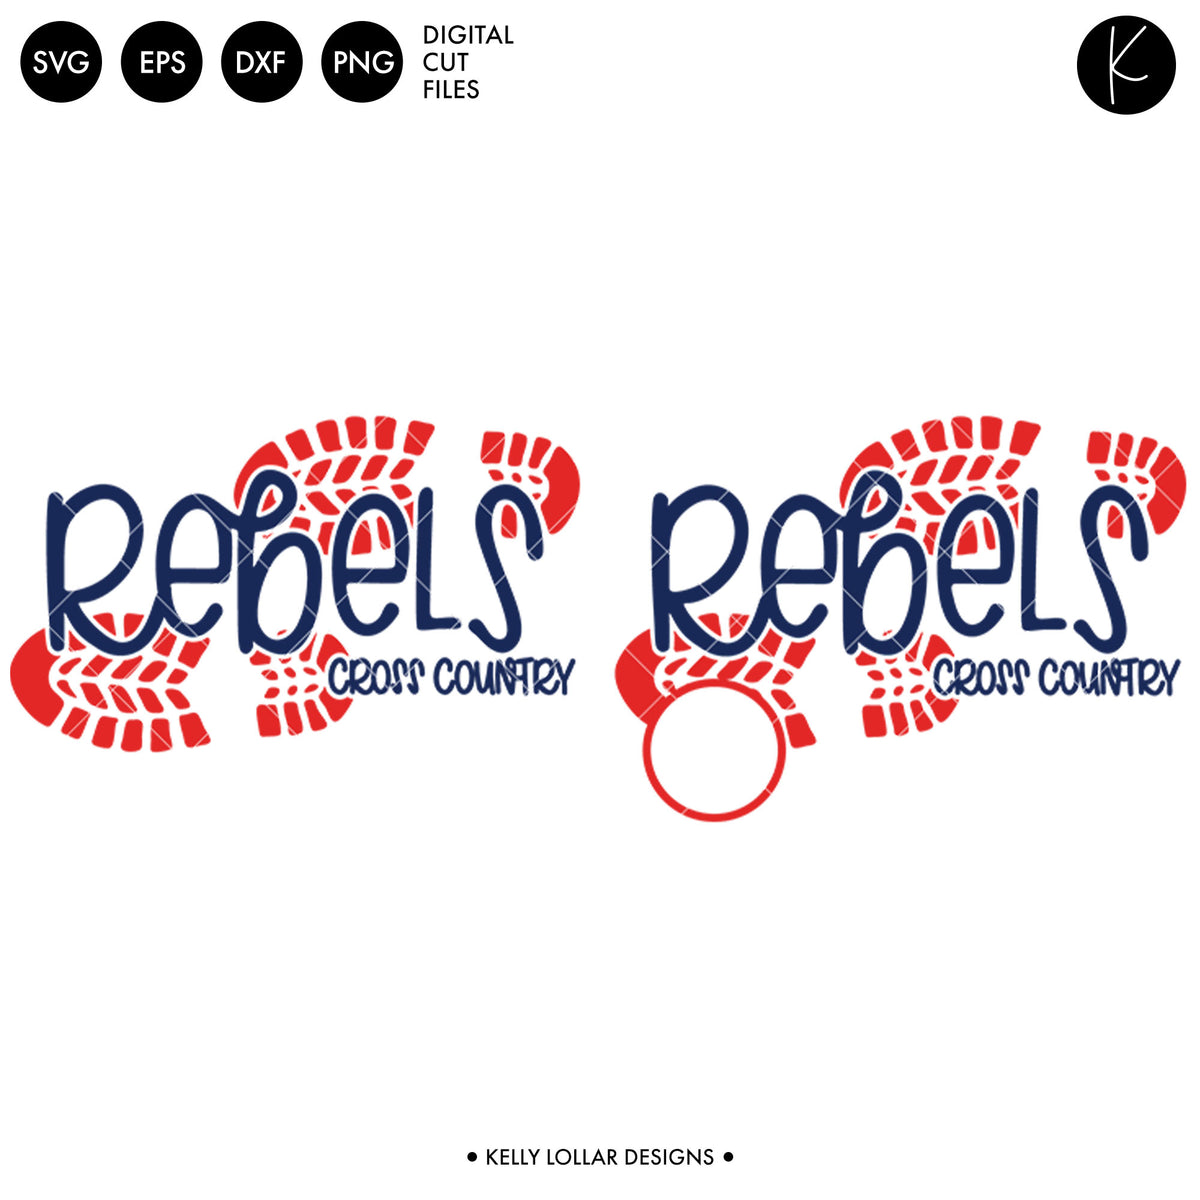 Rebels Cross Country Bundle | SVG DXF EPS PNG Cut Files